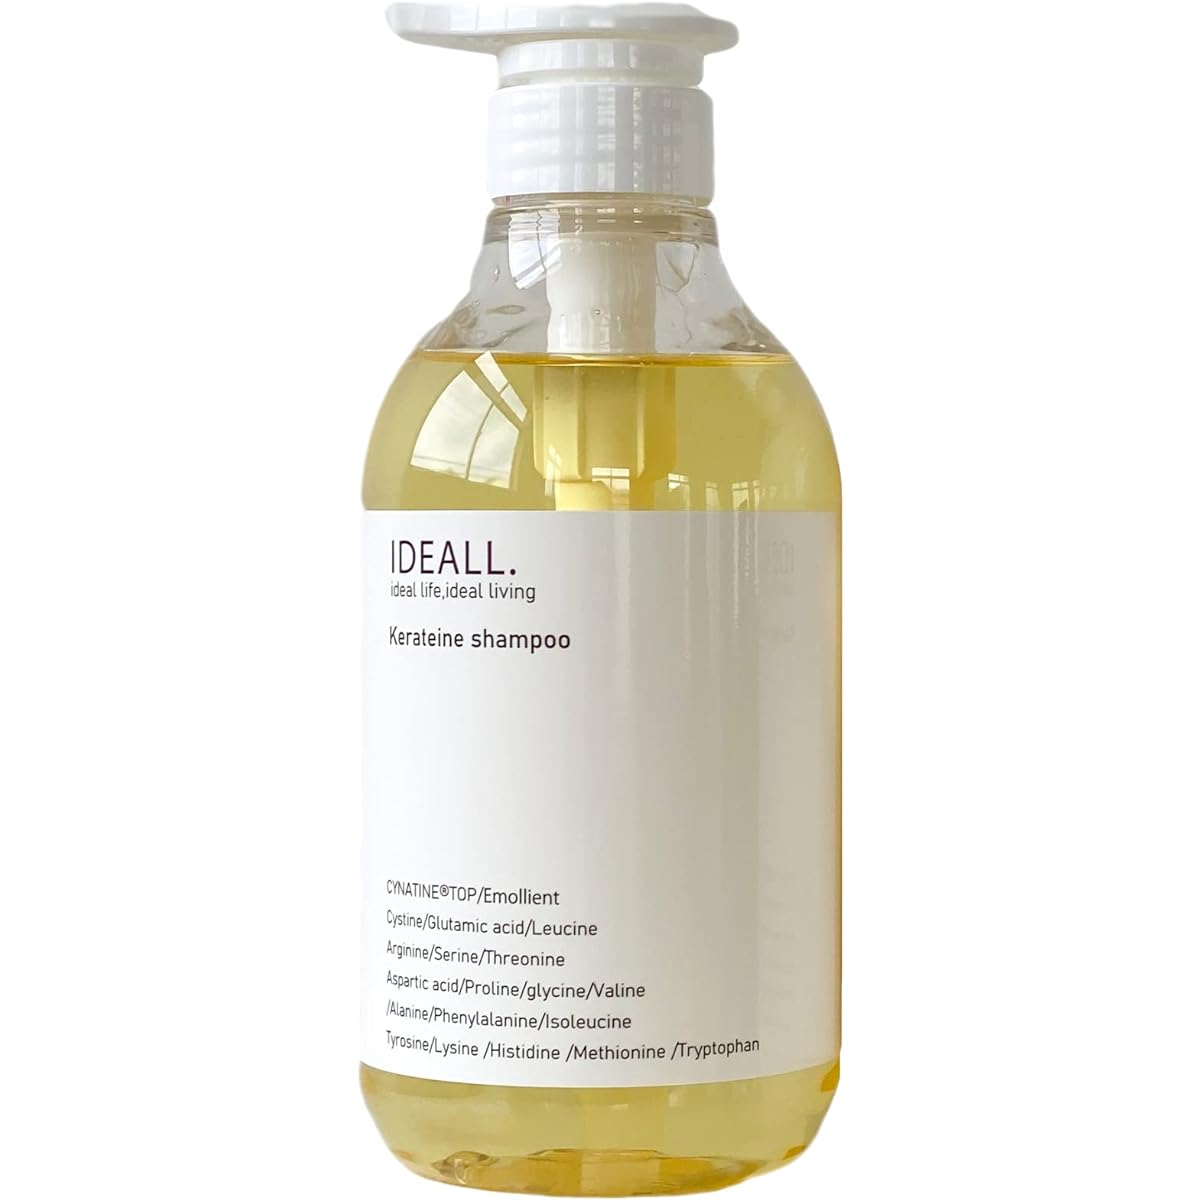 IDEALL Keratin Shampoo Treatment Contains Cinatin Top Non-Silicon Woody Citrus Scent 500ml